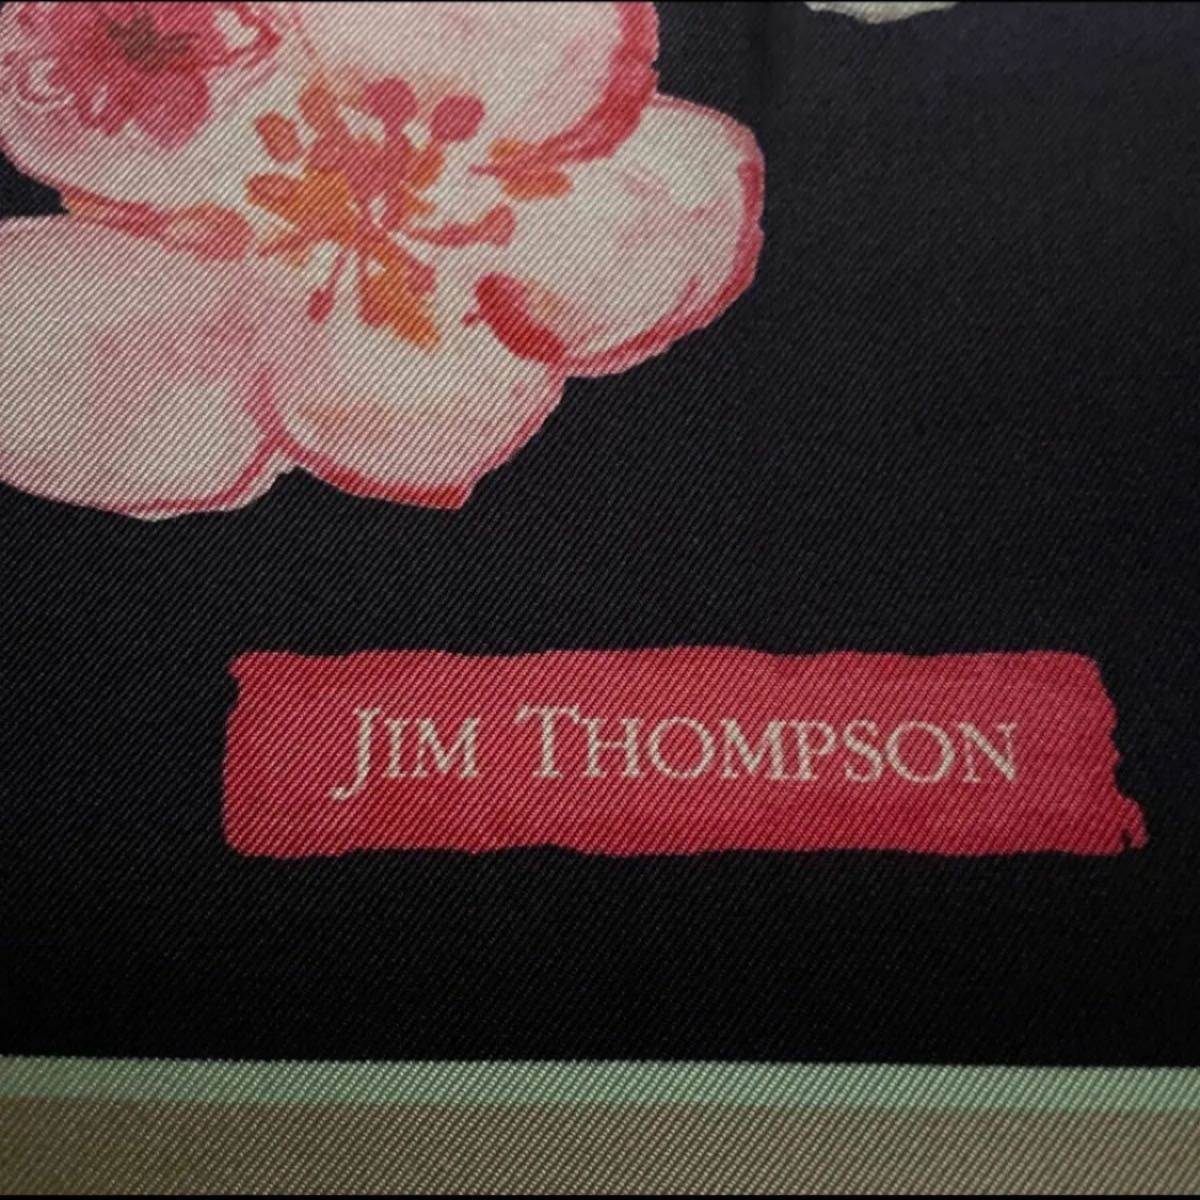 Jim thompson ジムトンプソン 大判シルクスカーフ(ハイビスカスシャワーピンク)83cm×83cm